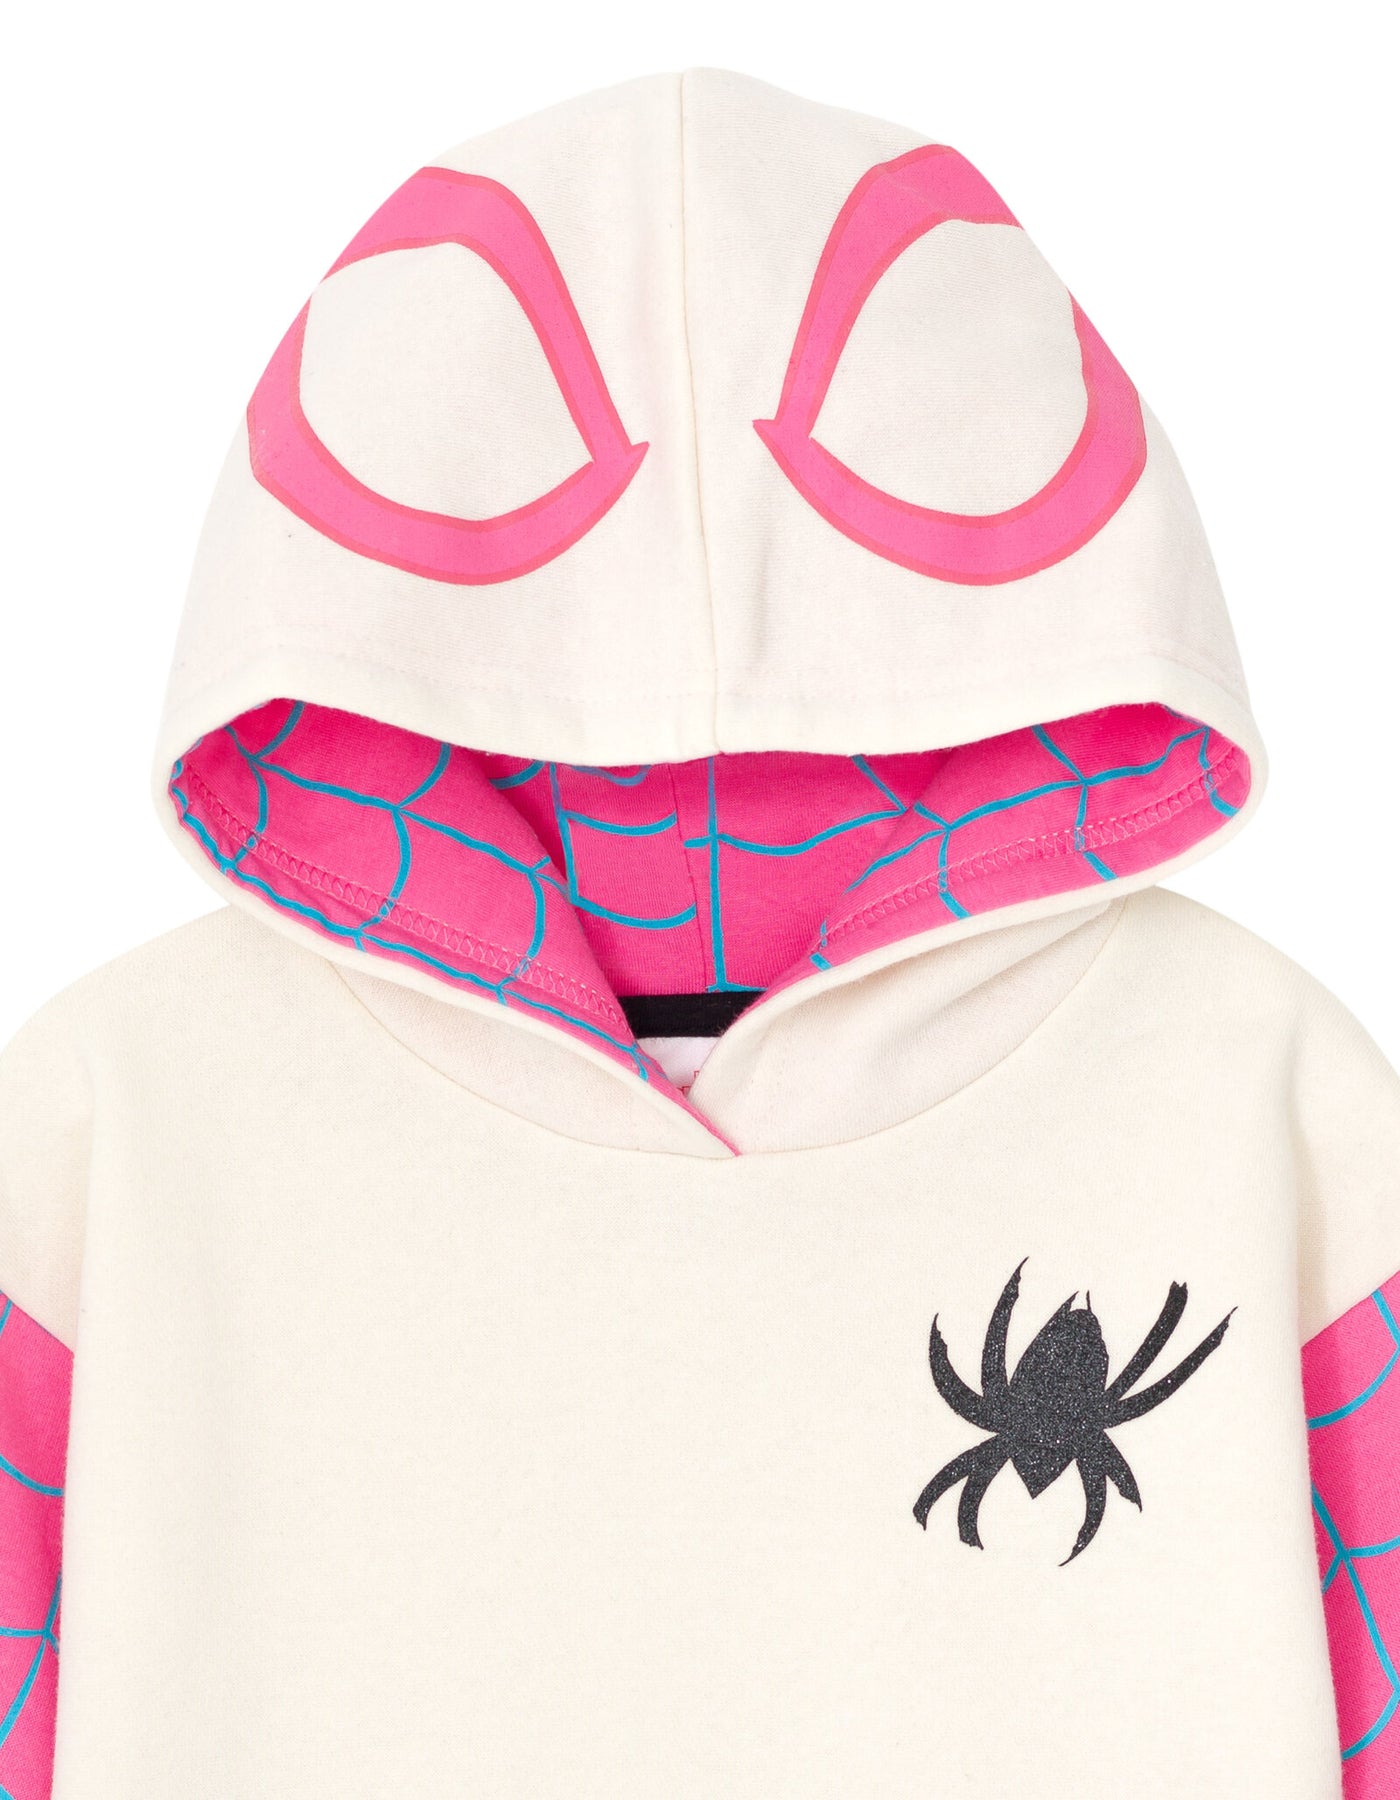 Marvel Spider-Man Spider-Gwen Fleece Skater Dress